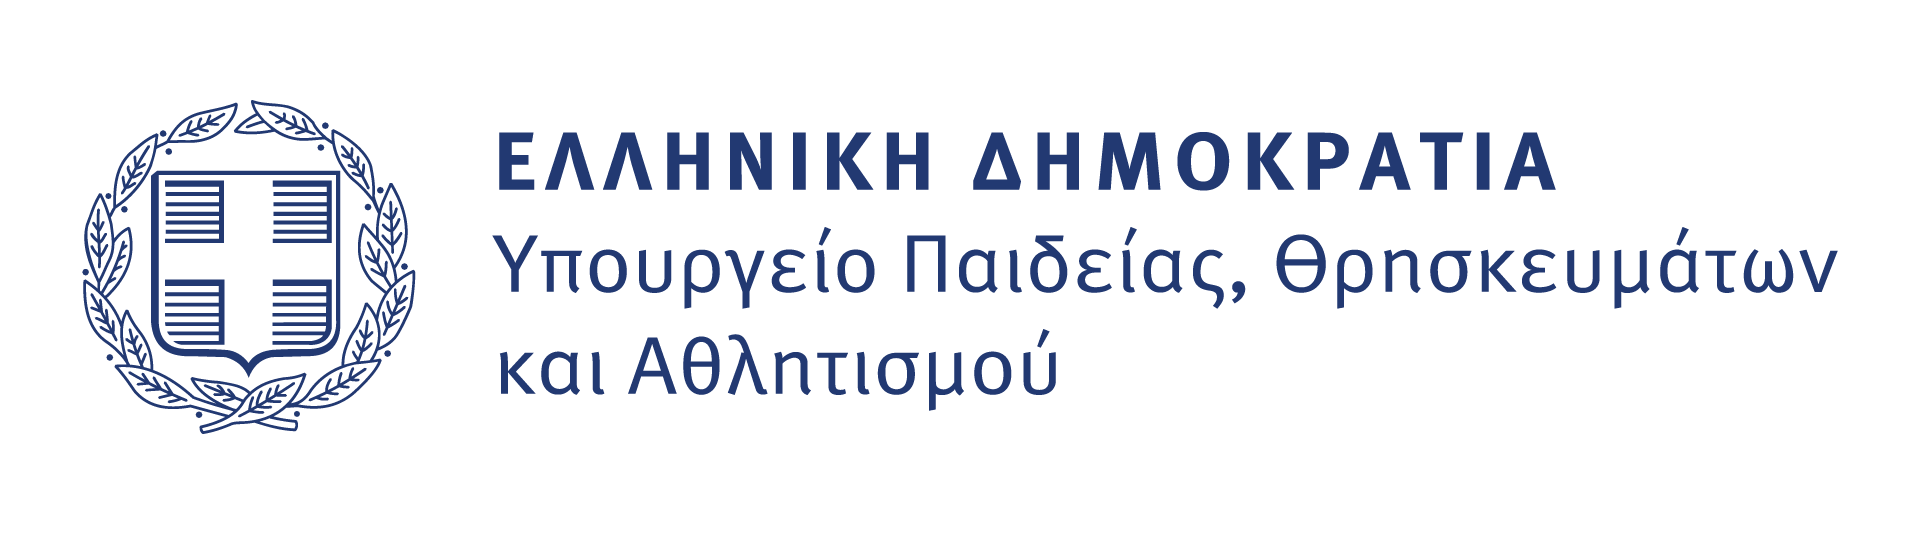 Minedu logo